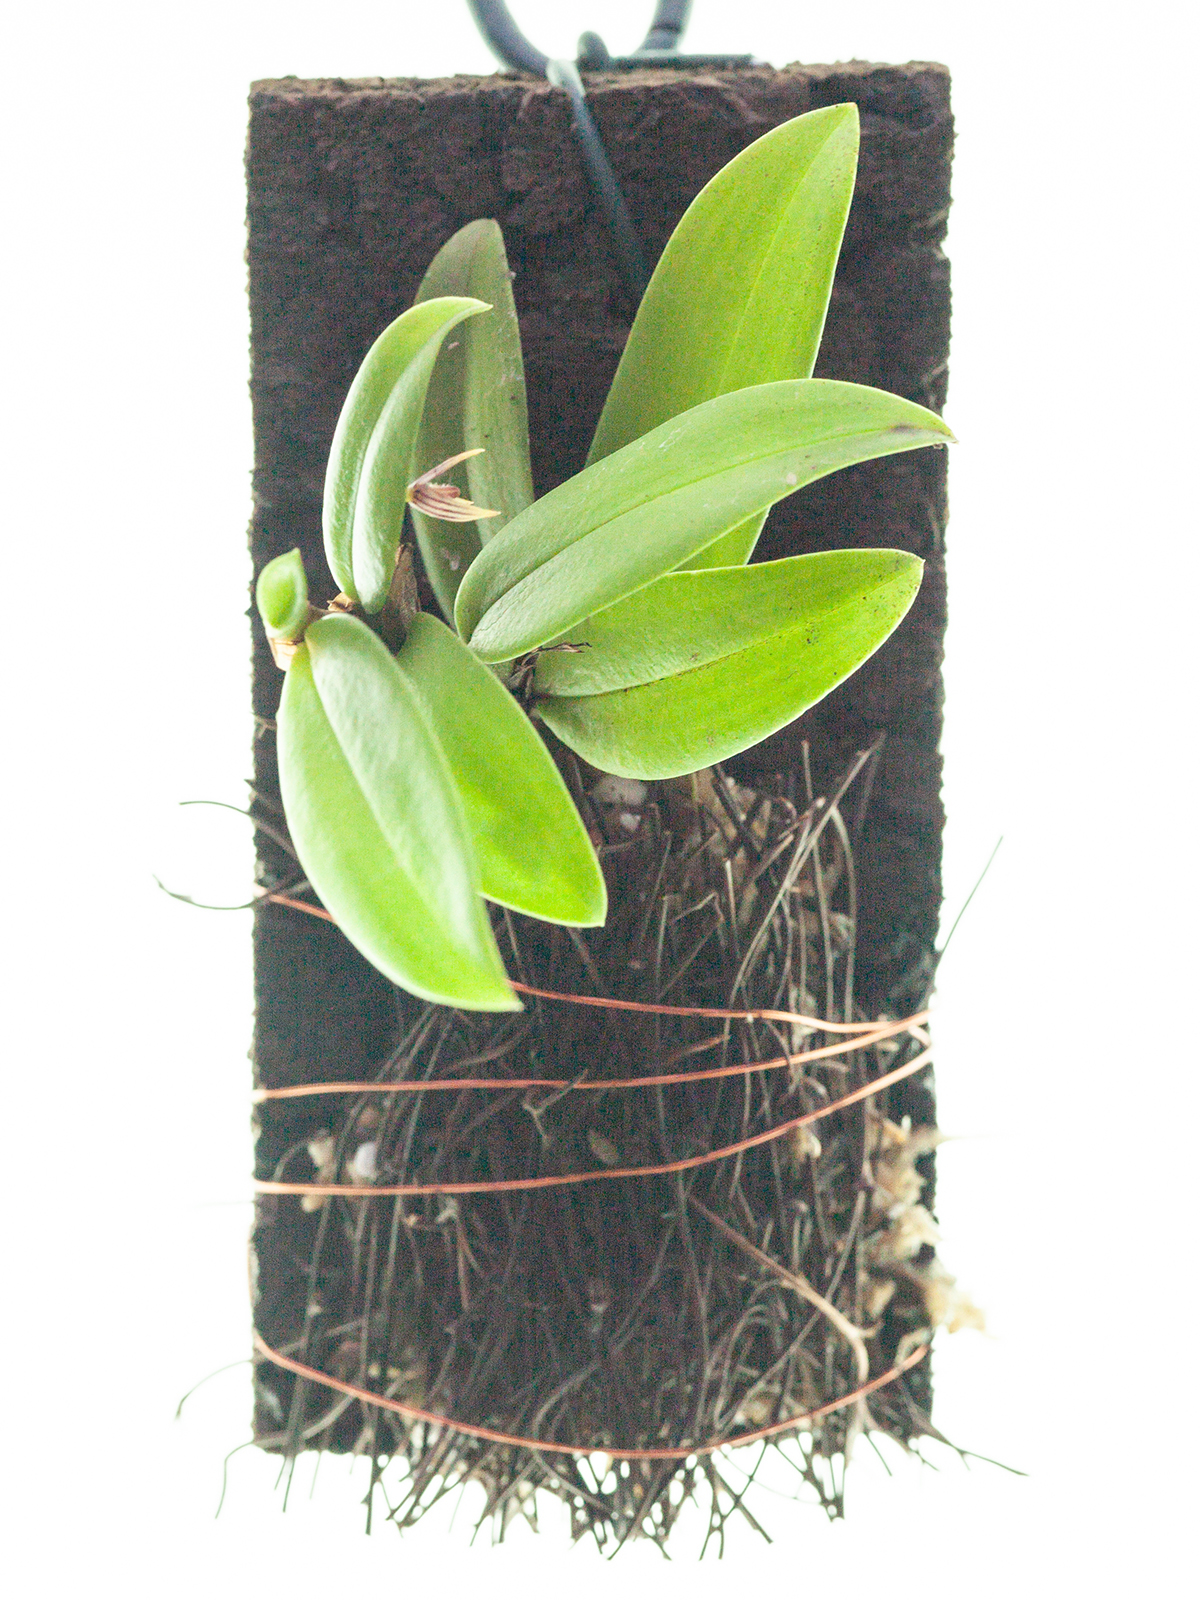 Bulbophyllum radicans